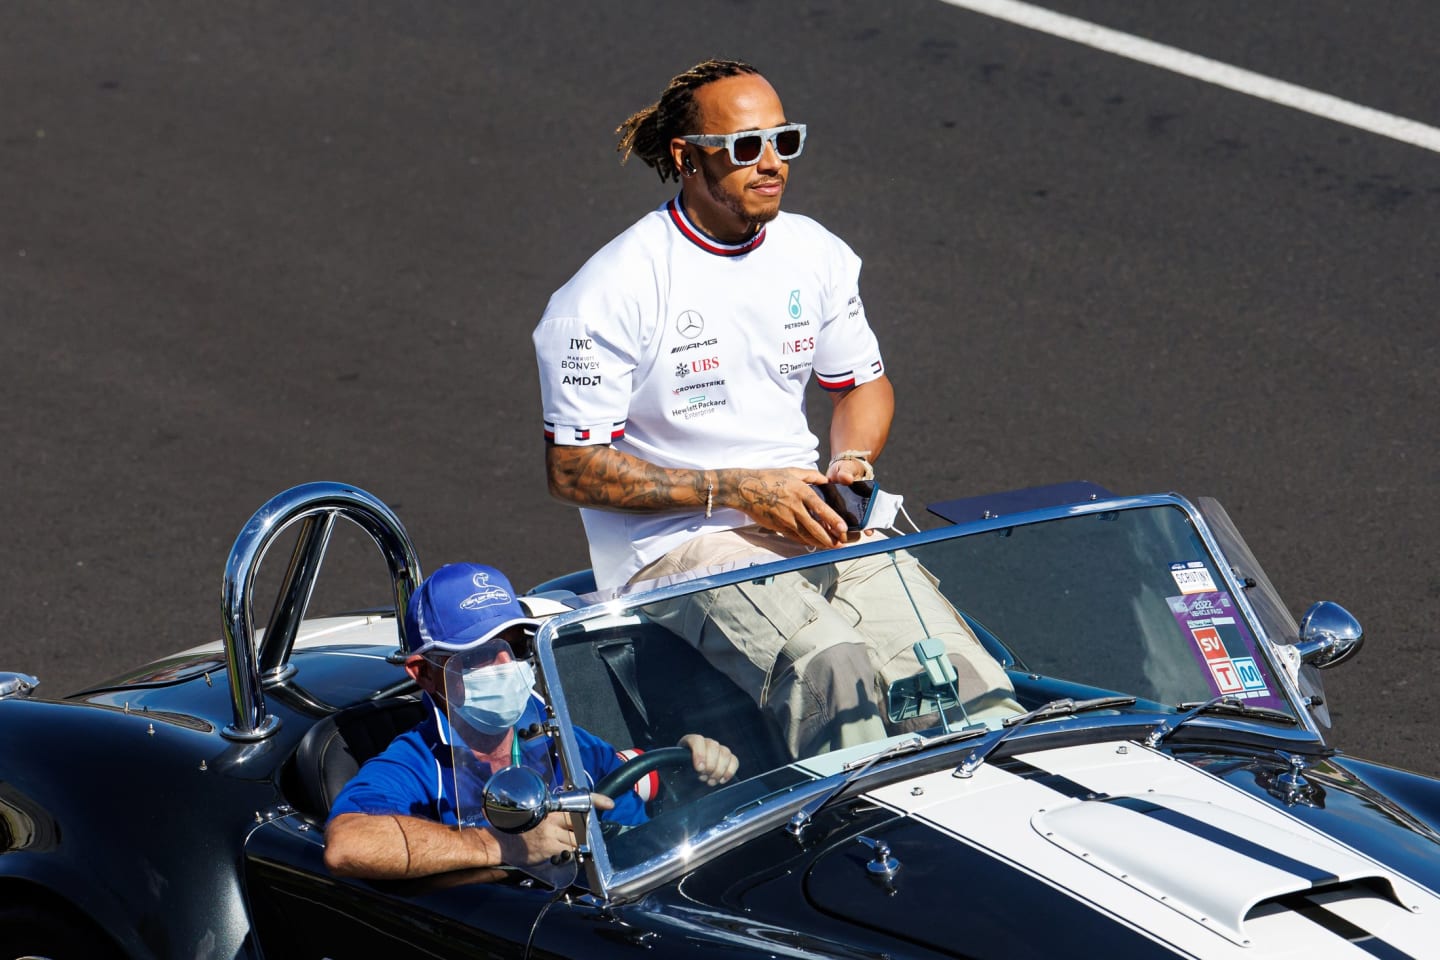 MELBOURNE, AUSTRALIA - APRIL 10: Lewis Hamilton of Great Britain during the drivers parade lap